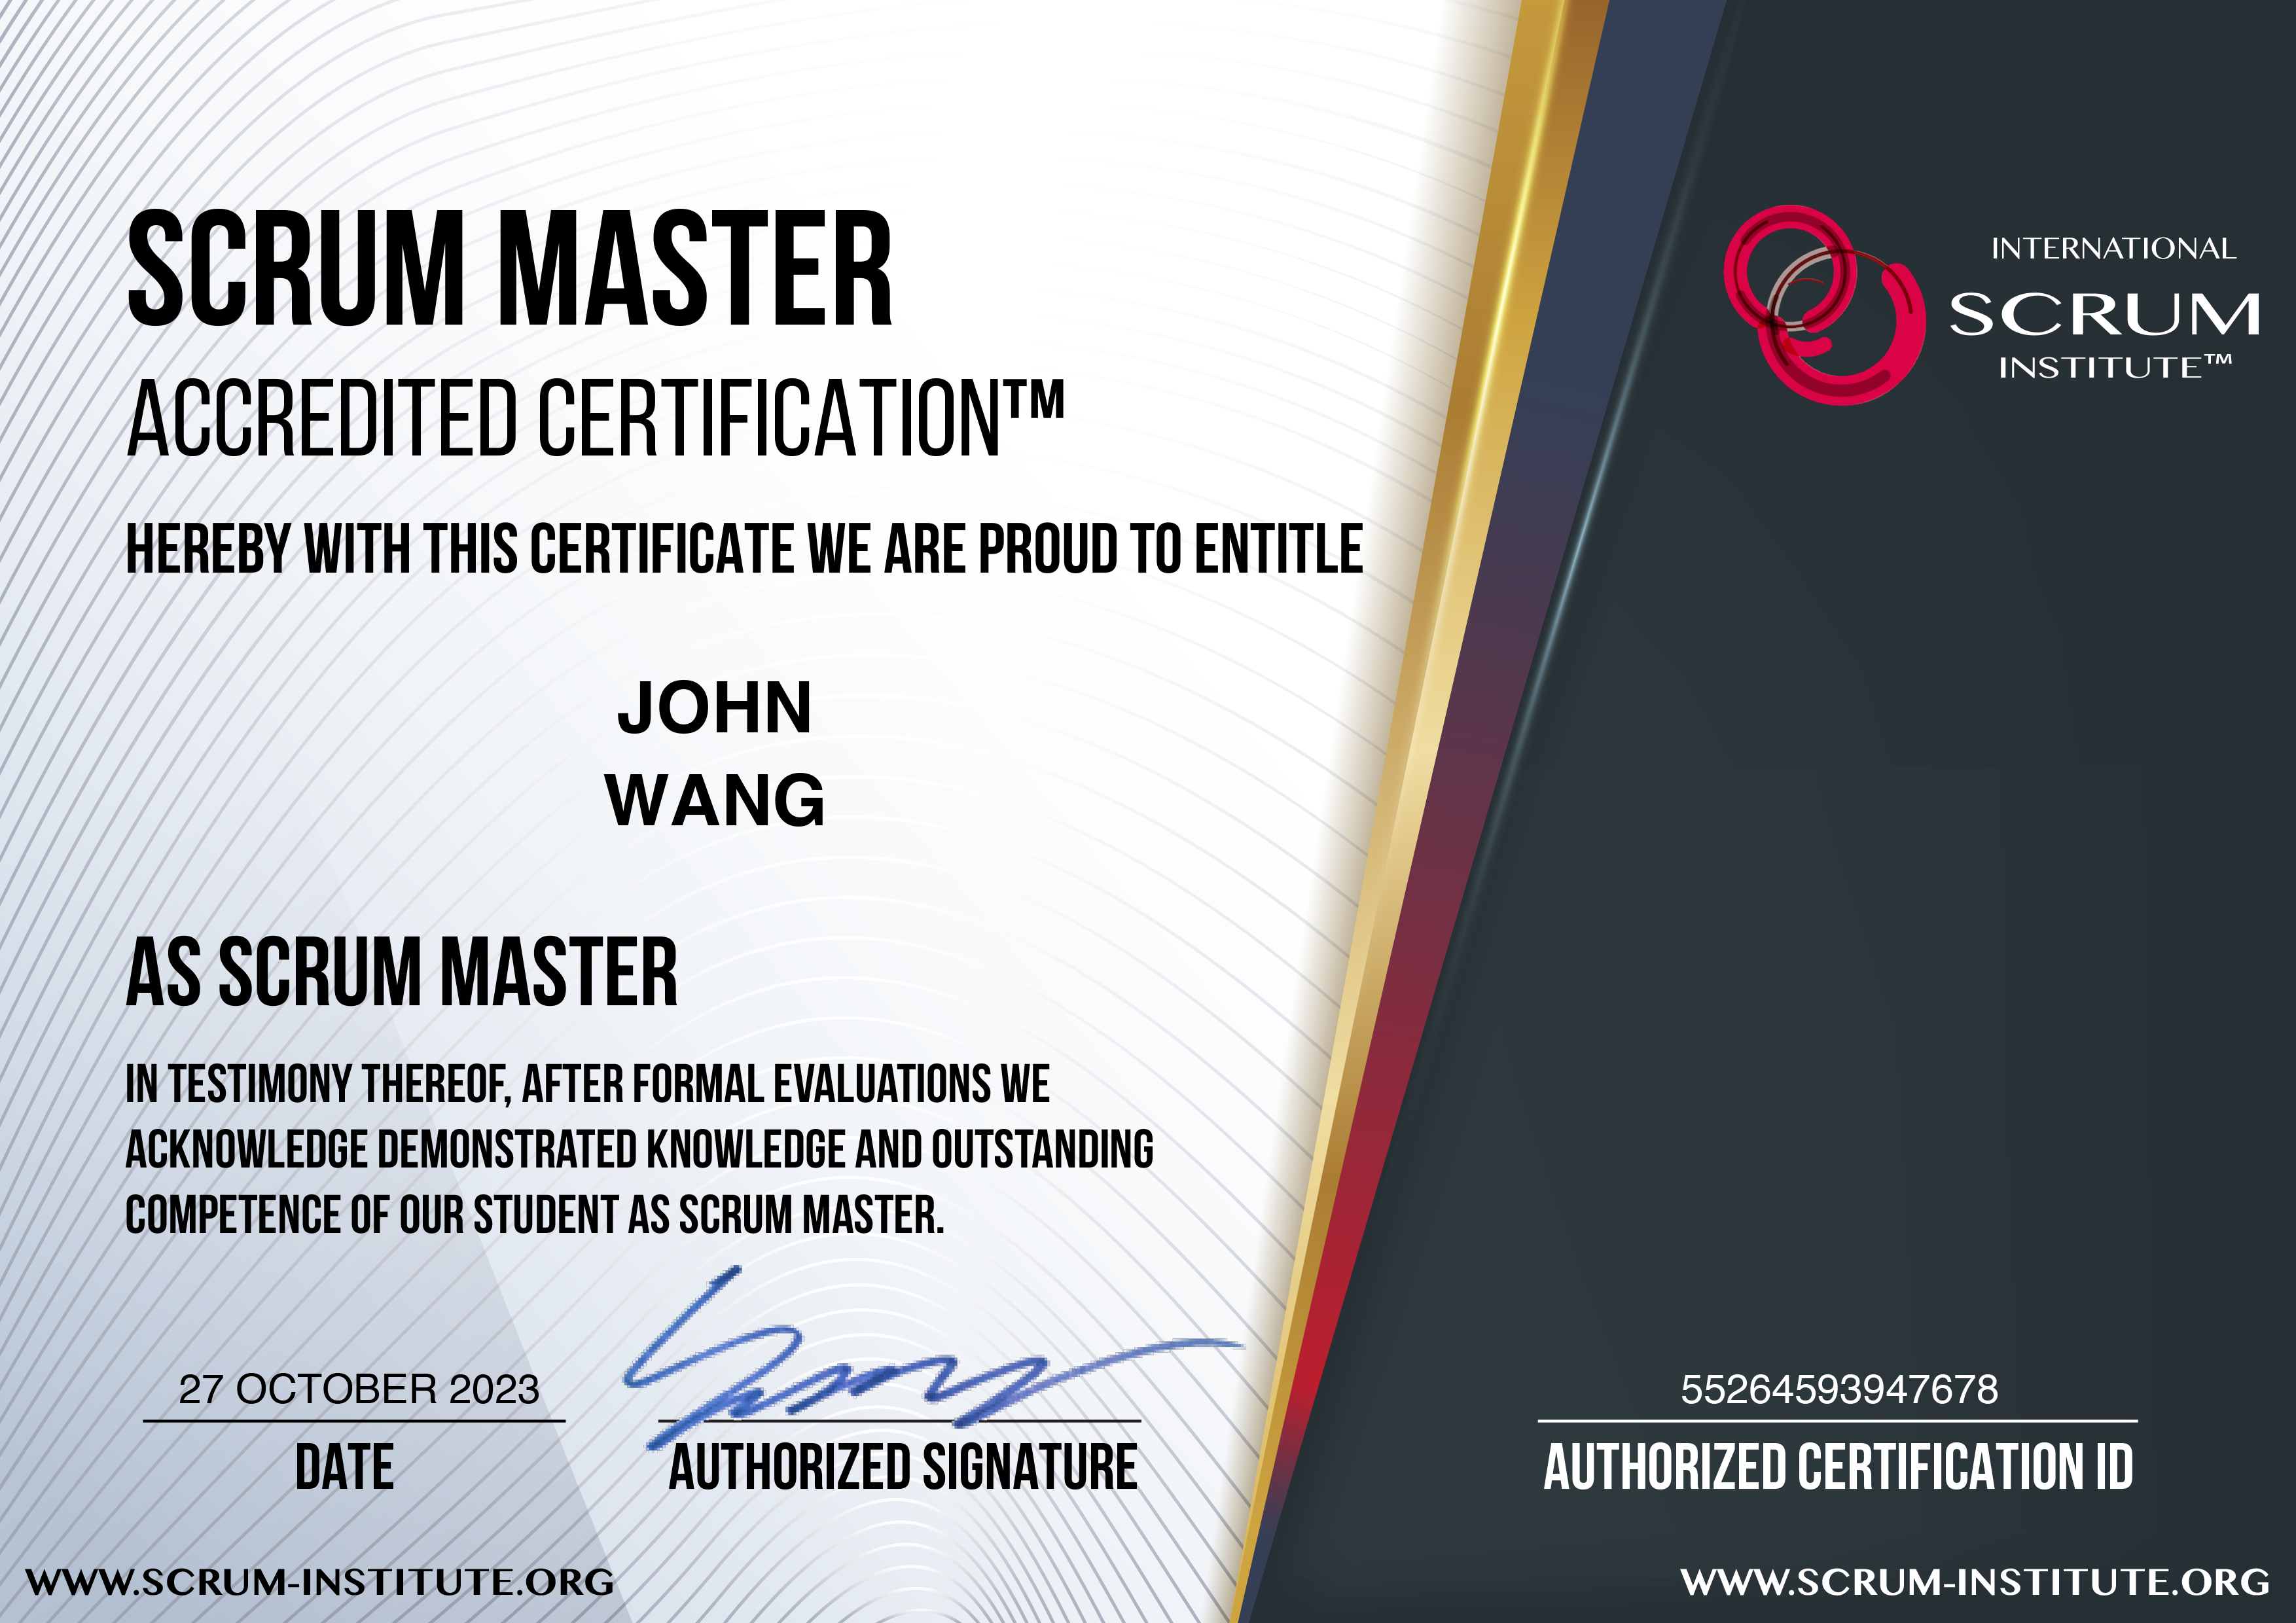 John's Scrum Master Accredited Certification (SMAC) from Scrum Institute